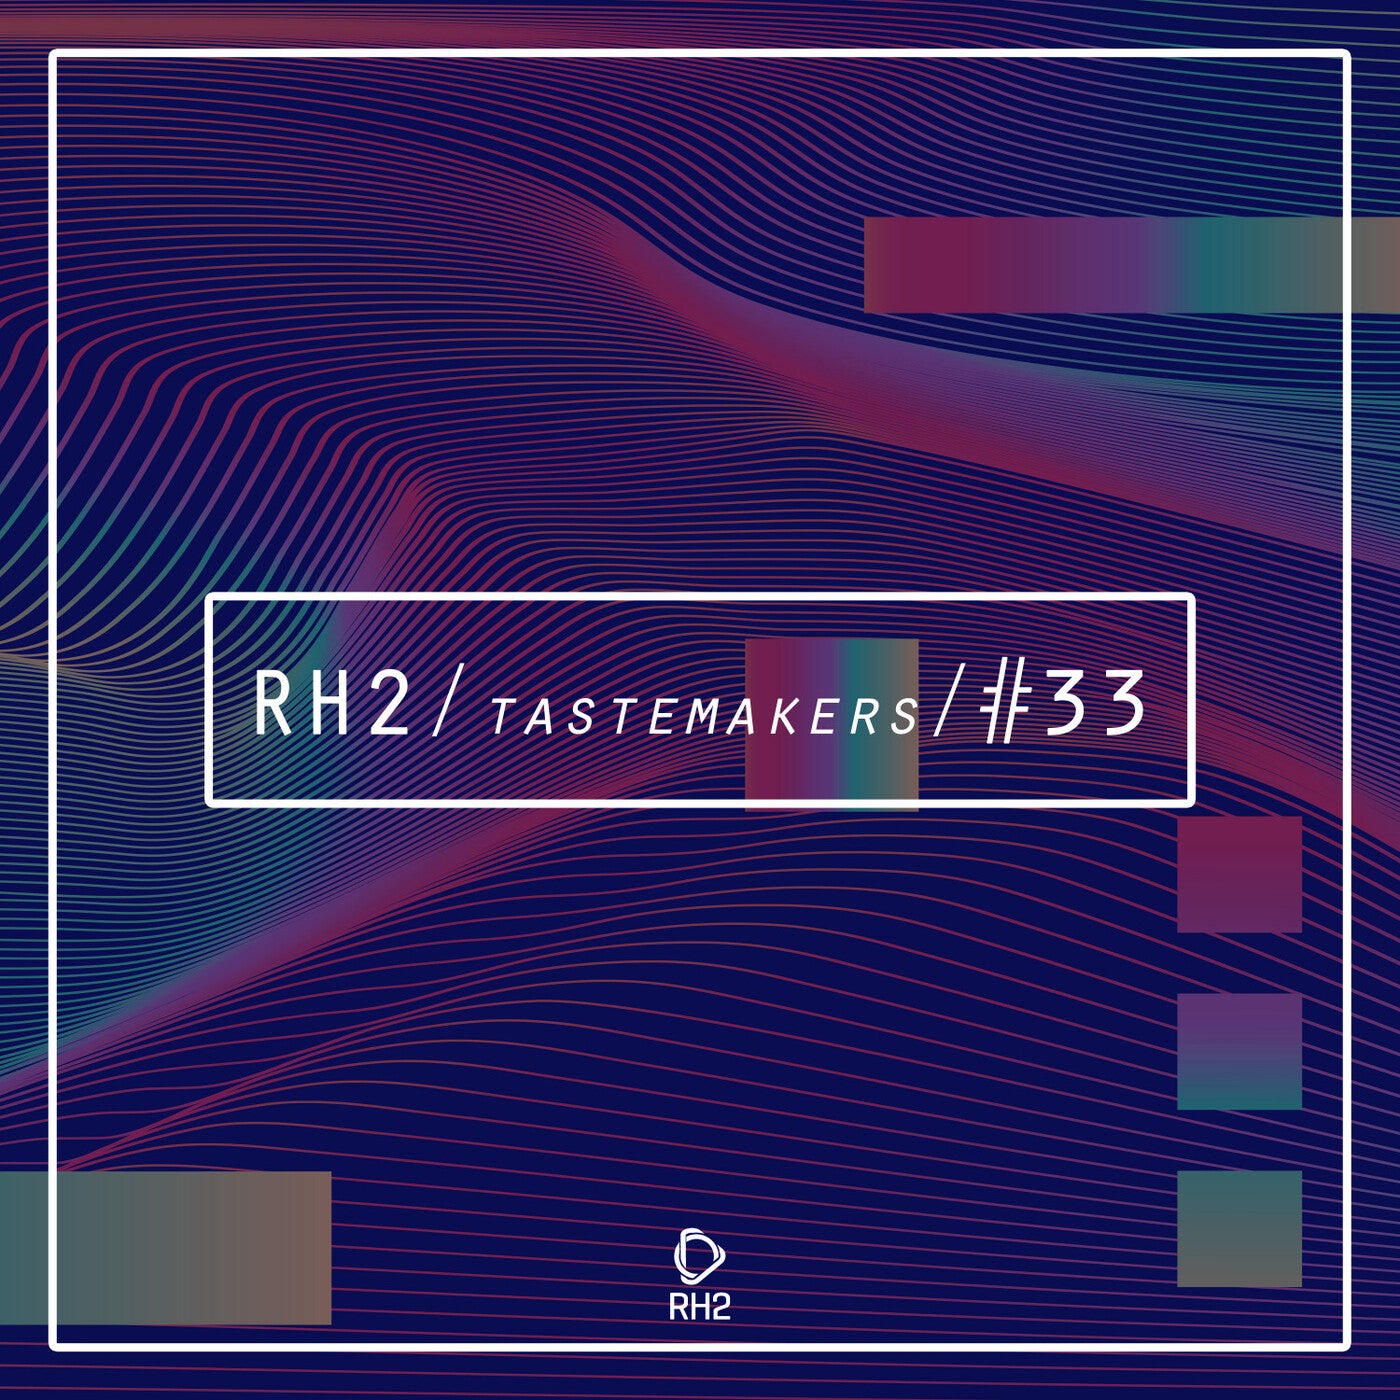 RH2 Tastemakers #33